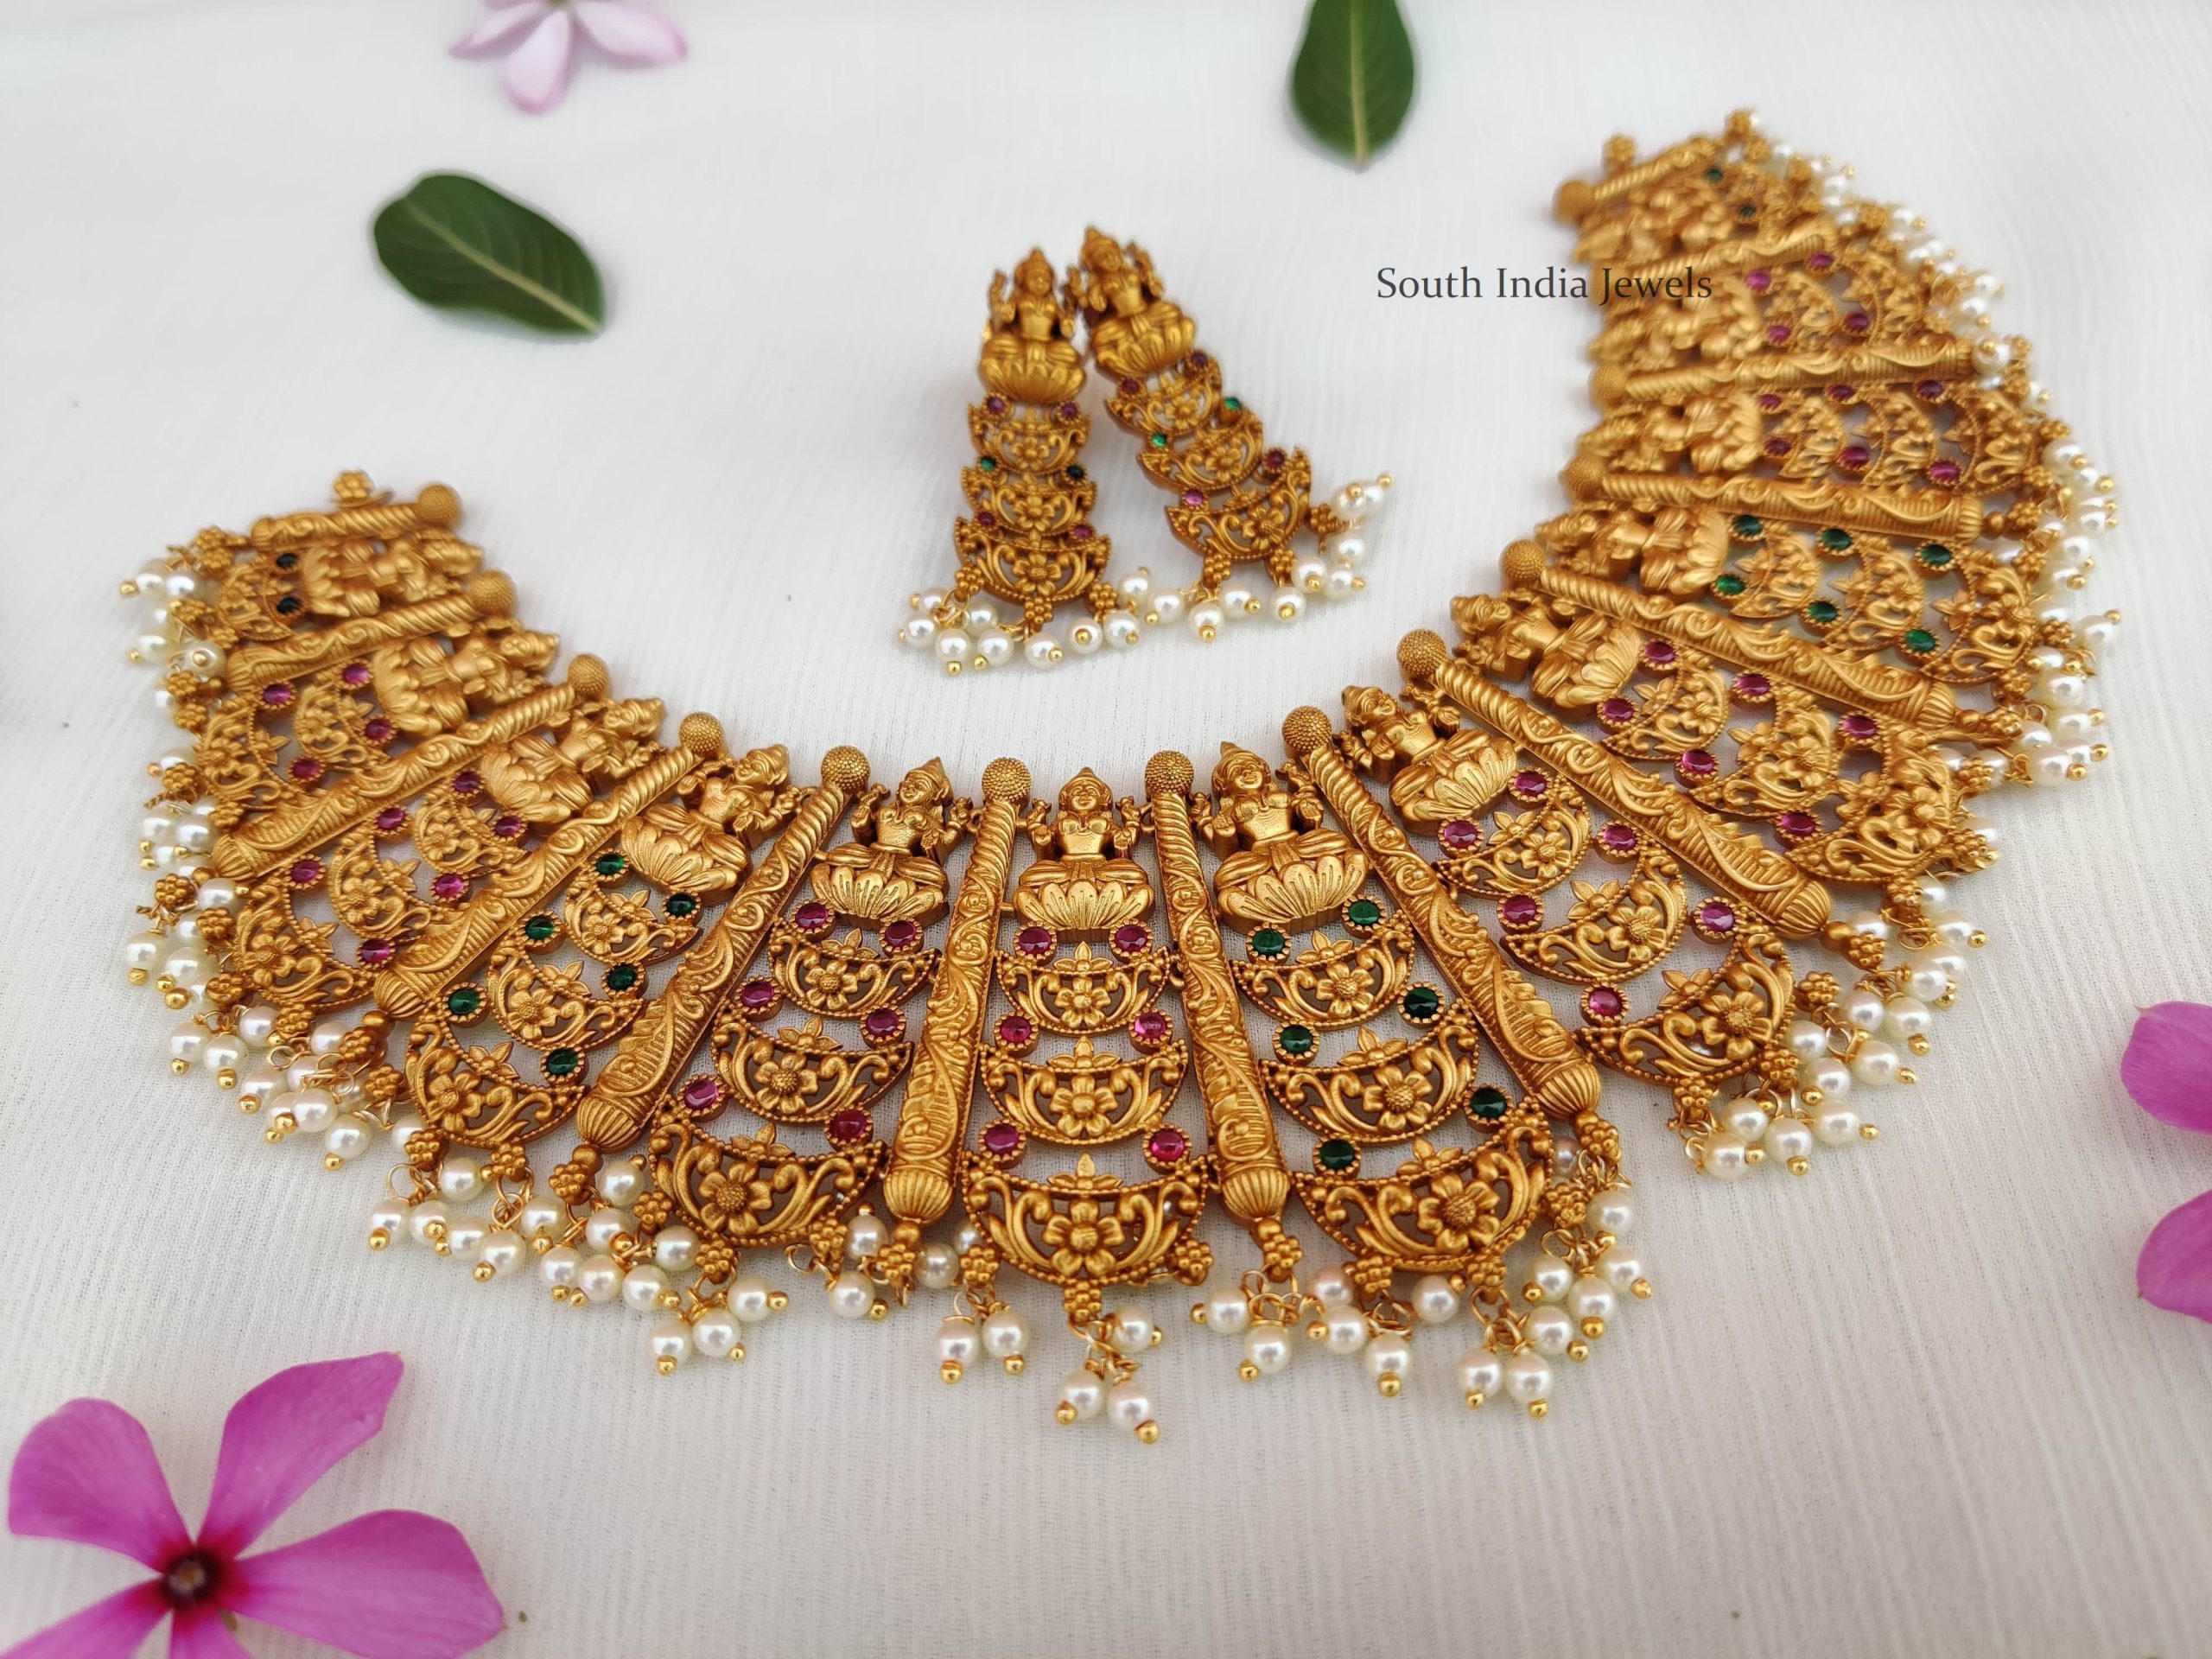 Grand Lakshmi Design Choker - South India Jewels